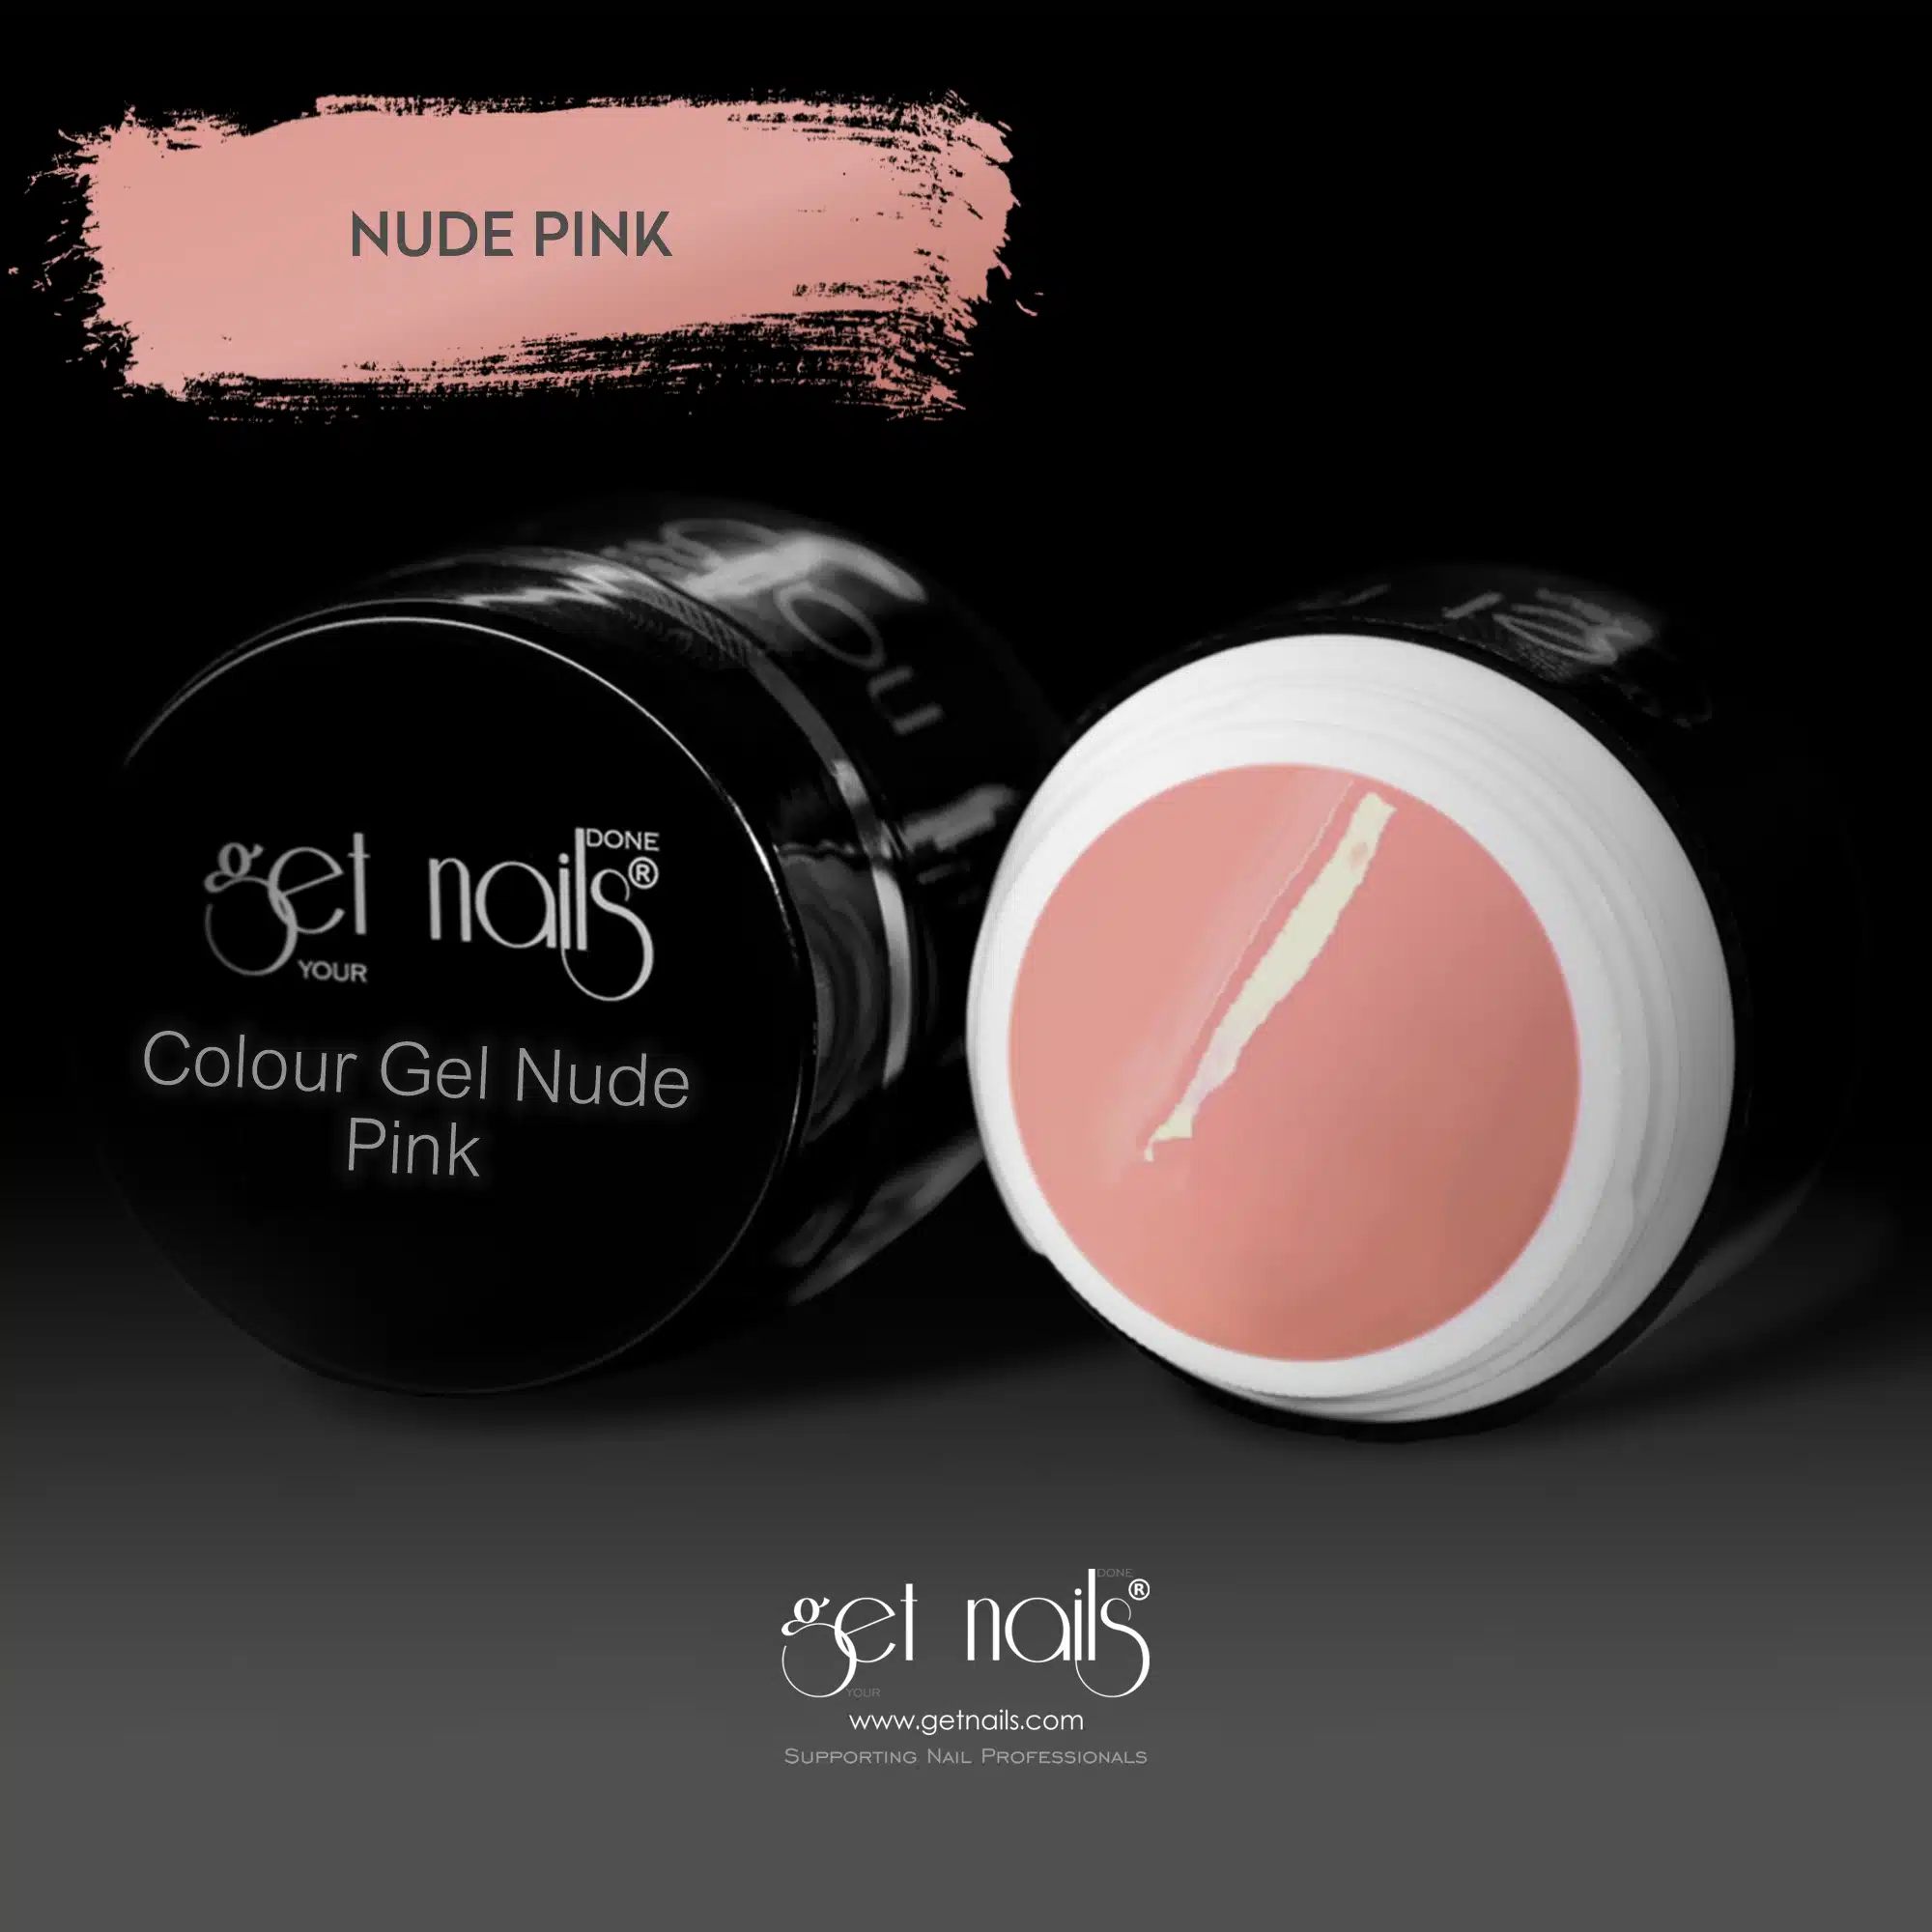 Get Nails Austria - Цветной гель Nude Pink 5g